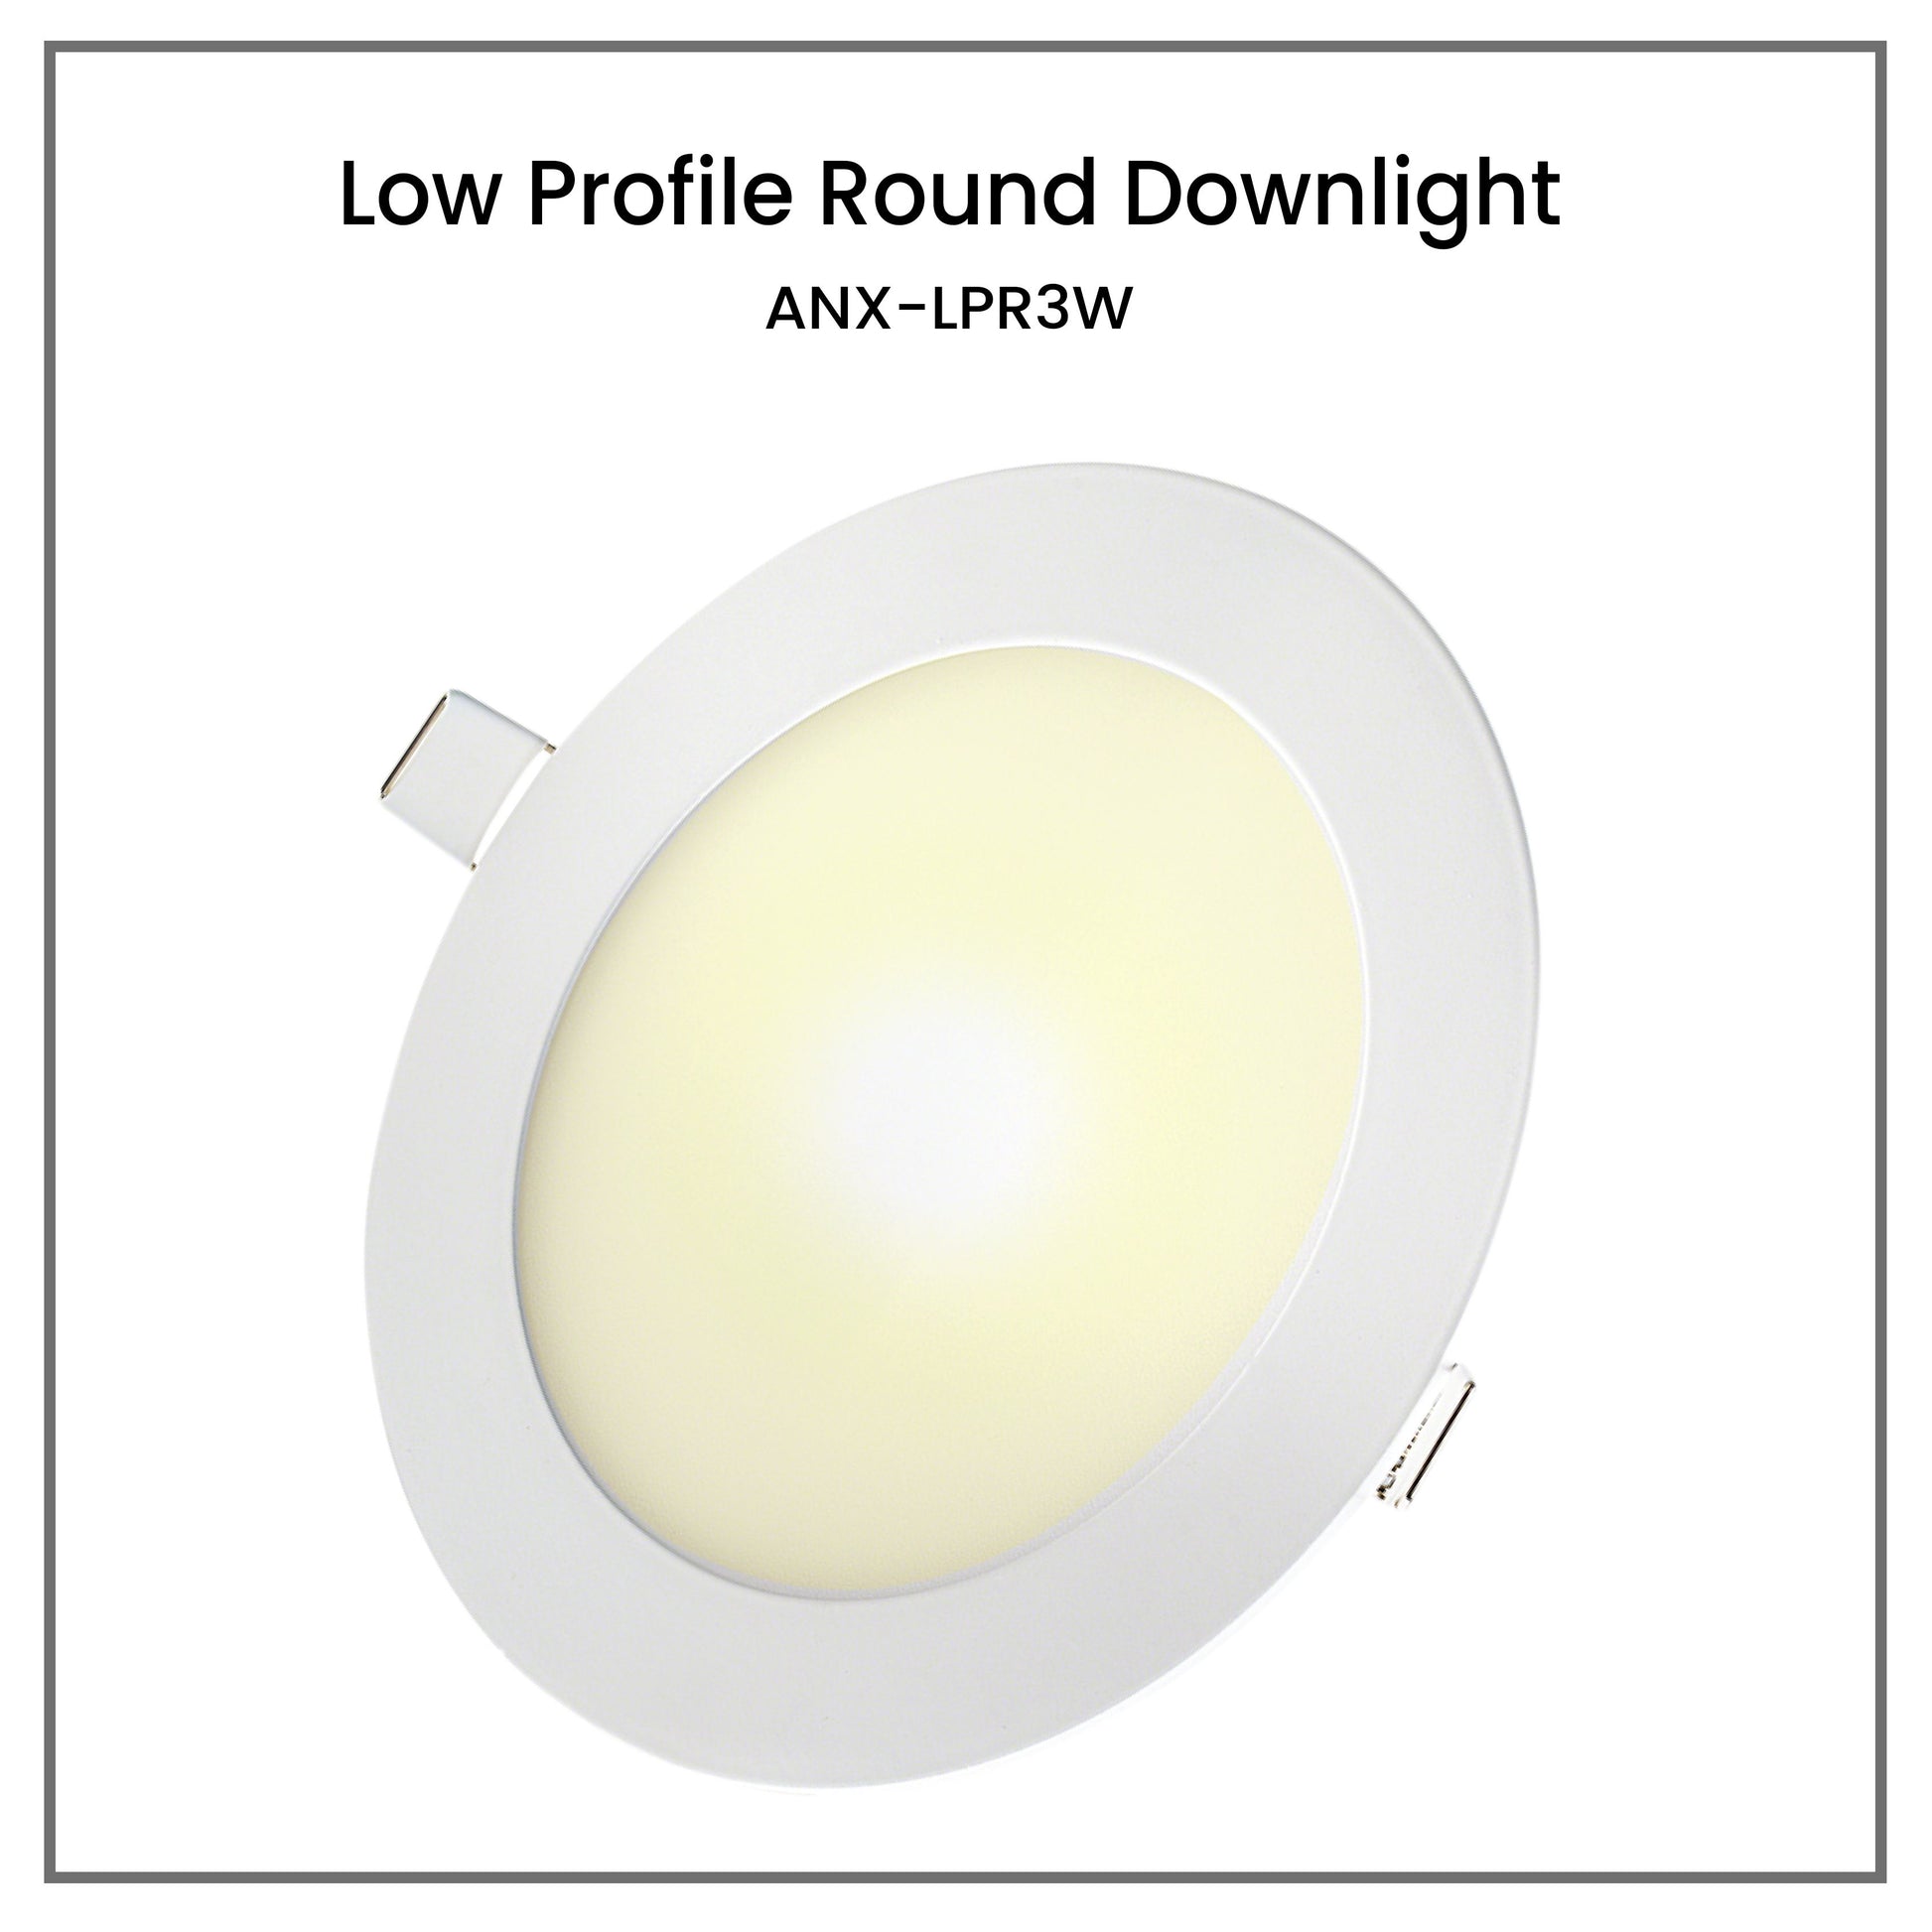 NxLedNxled 3W LED Low Profile Downlight (ANX-LPR3W)
Key Features:
Nxled 3W LED Low Profile Downlight (ANX-LPR3W)


3W, 3000K, Warm White,
120 lumens
85x22mm, 30,000HRS
220-240VAC 50/60Hz
downlightsNXLED